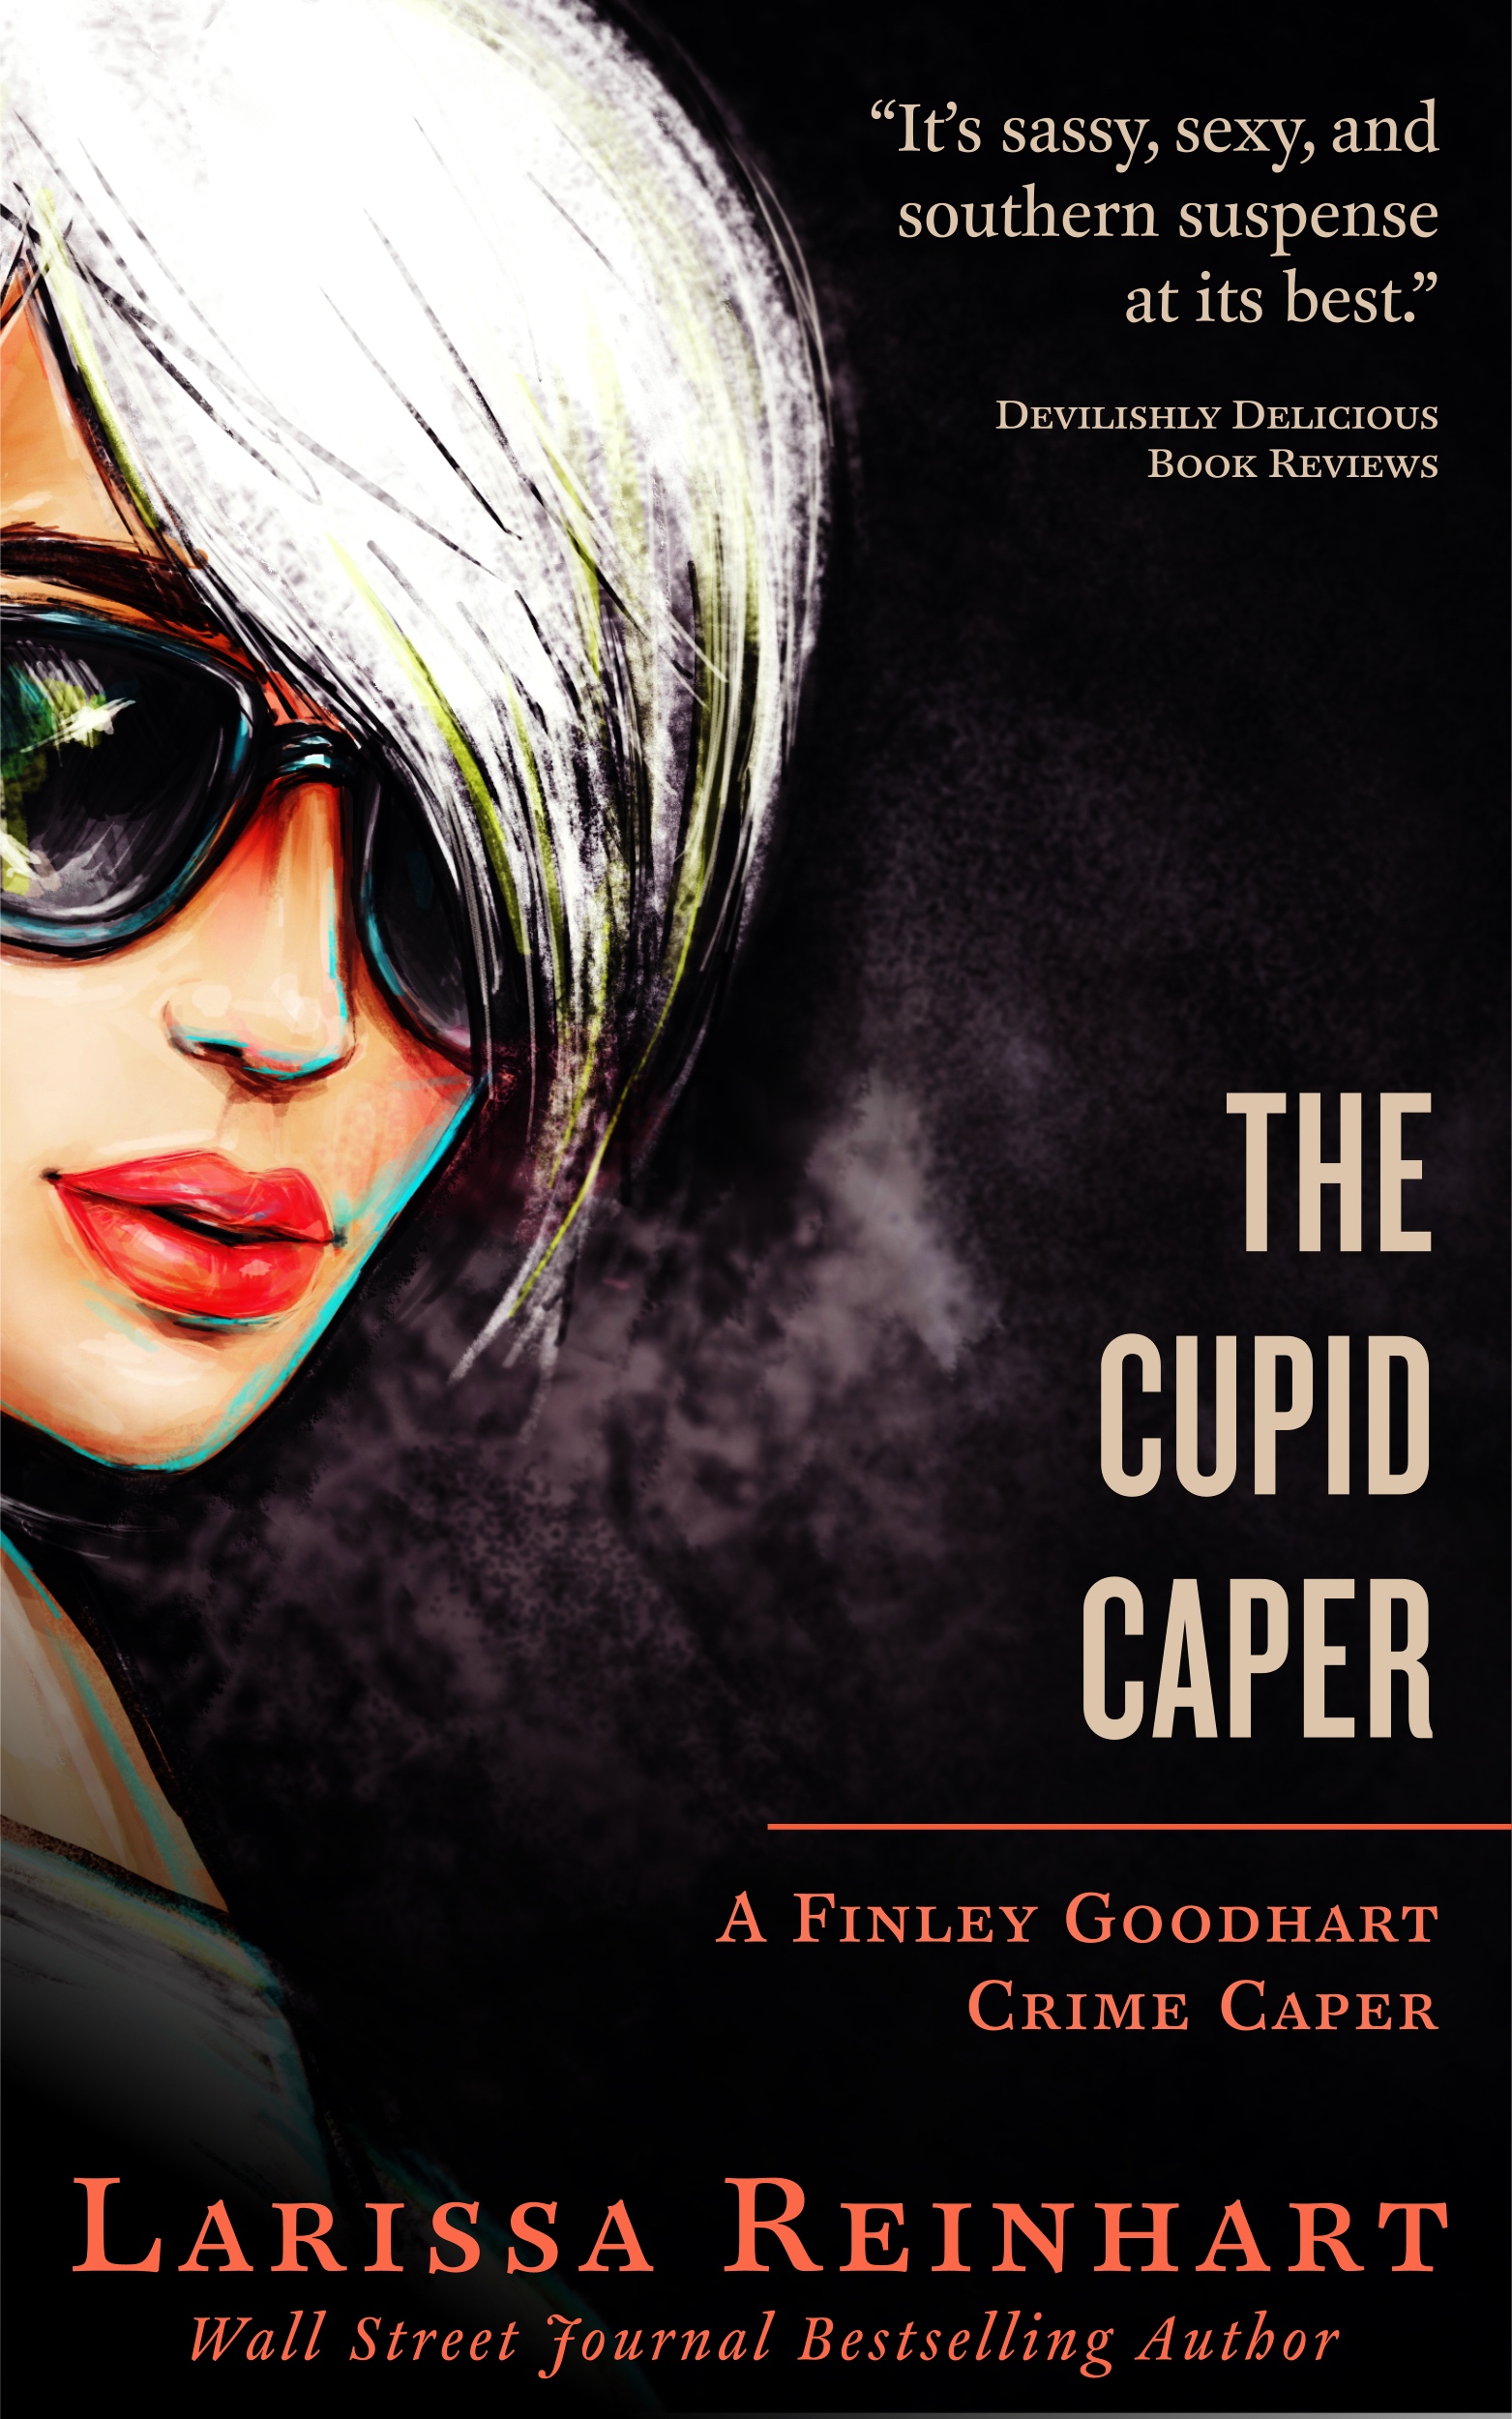 The Cupid Caper, A Finley Goodhart Crime Caper book 1 by Larissa Reinhart